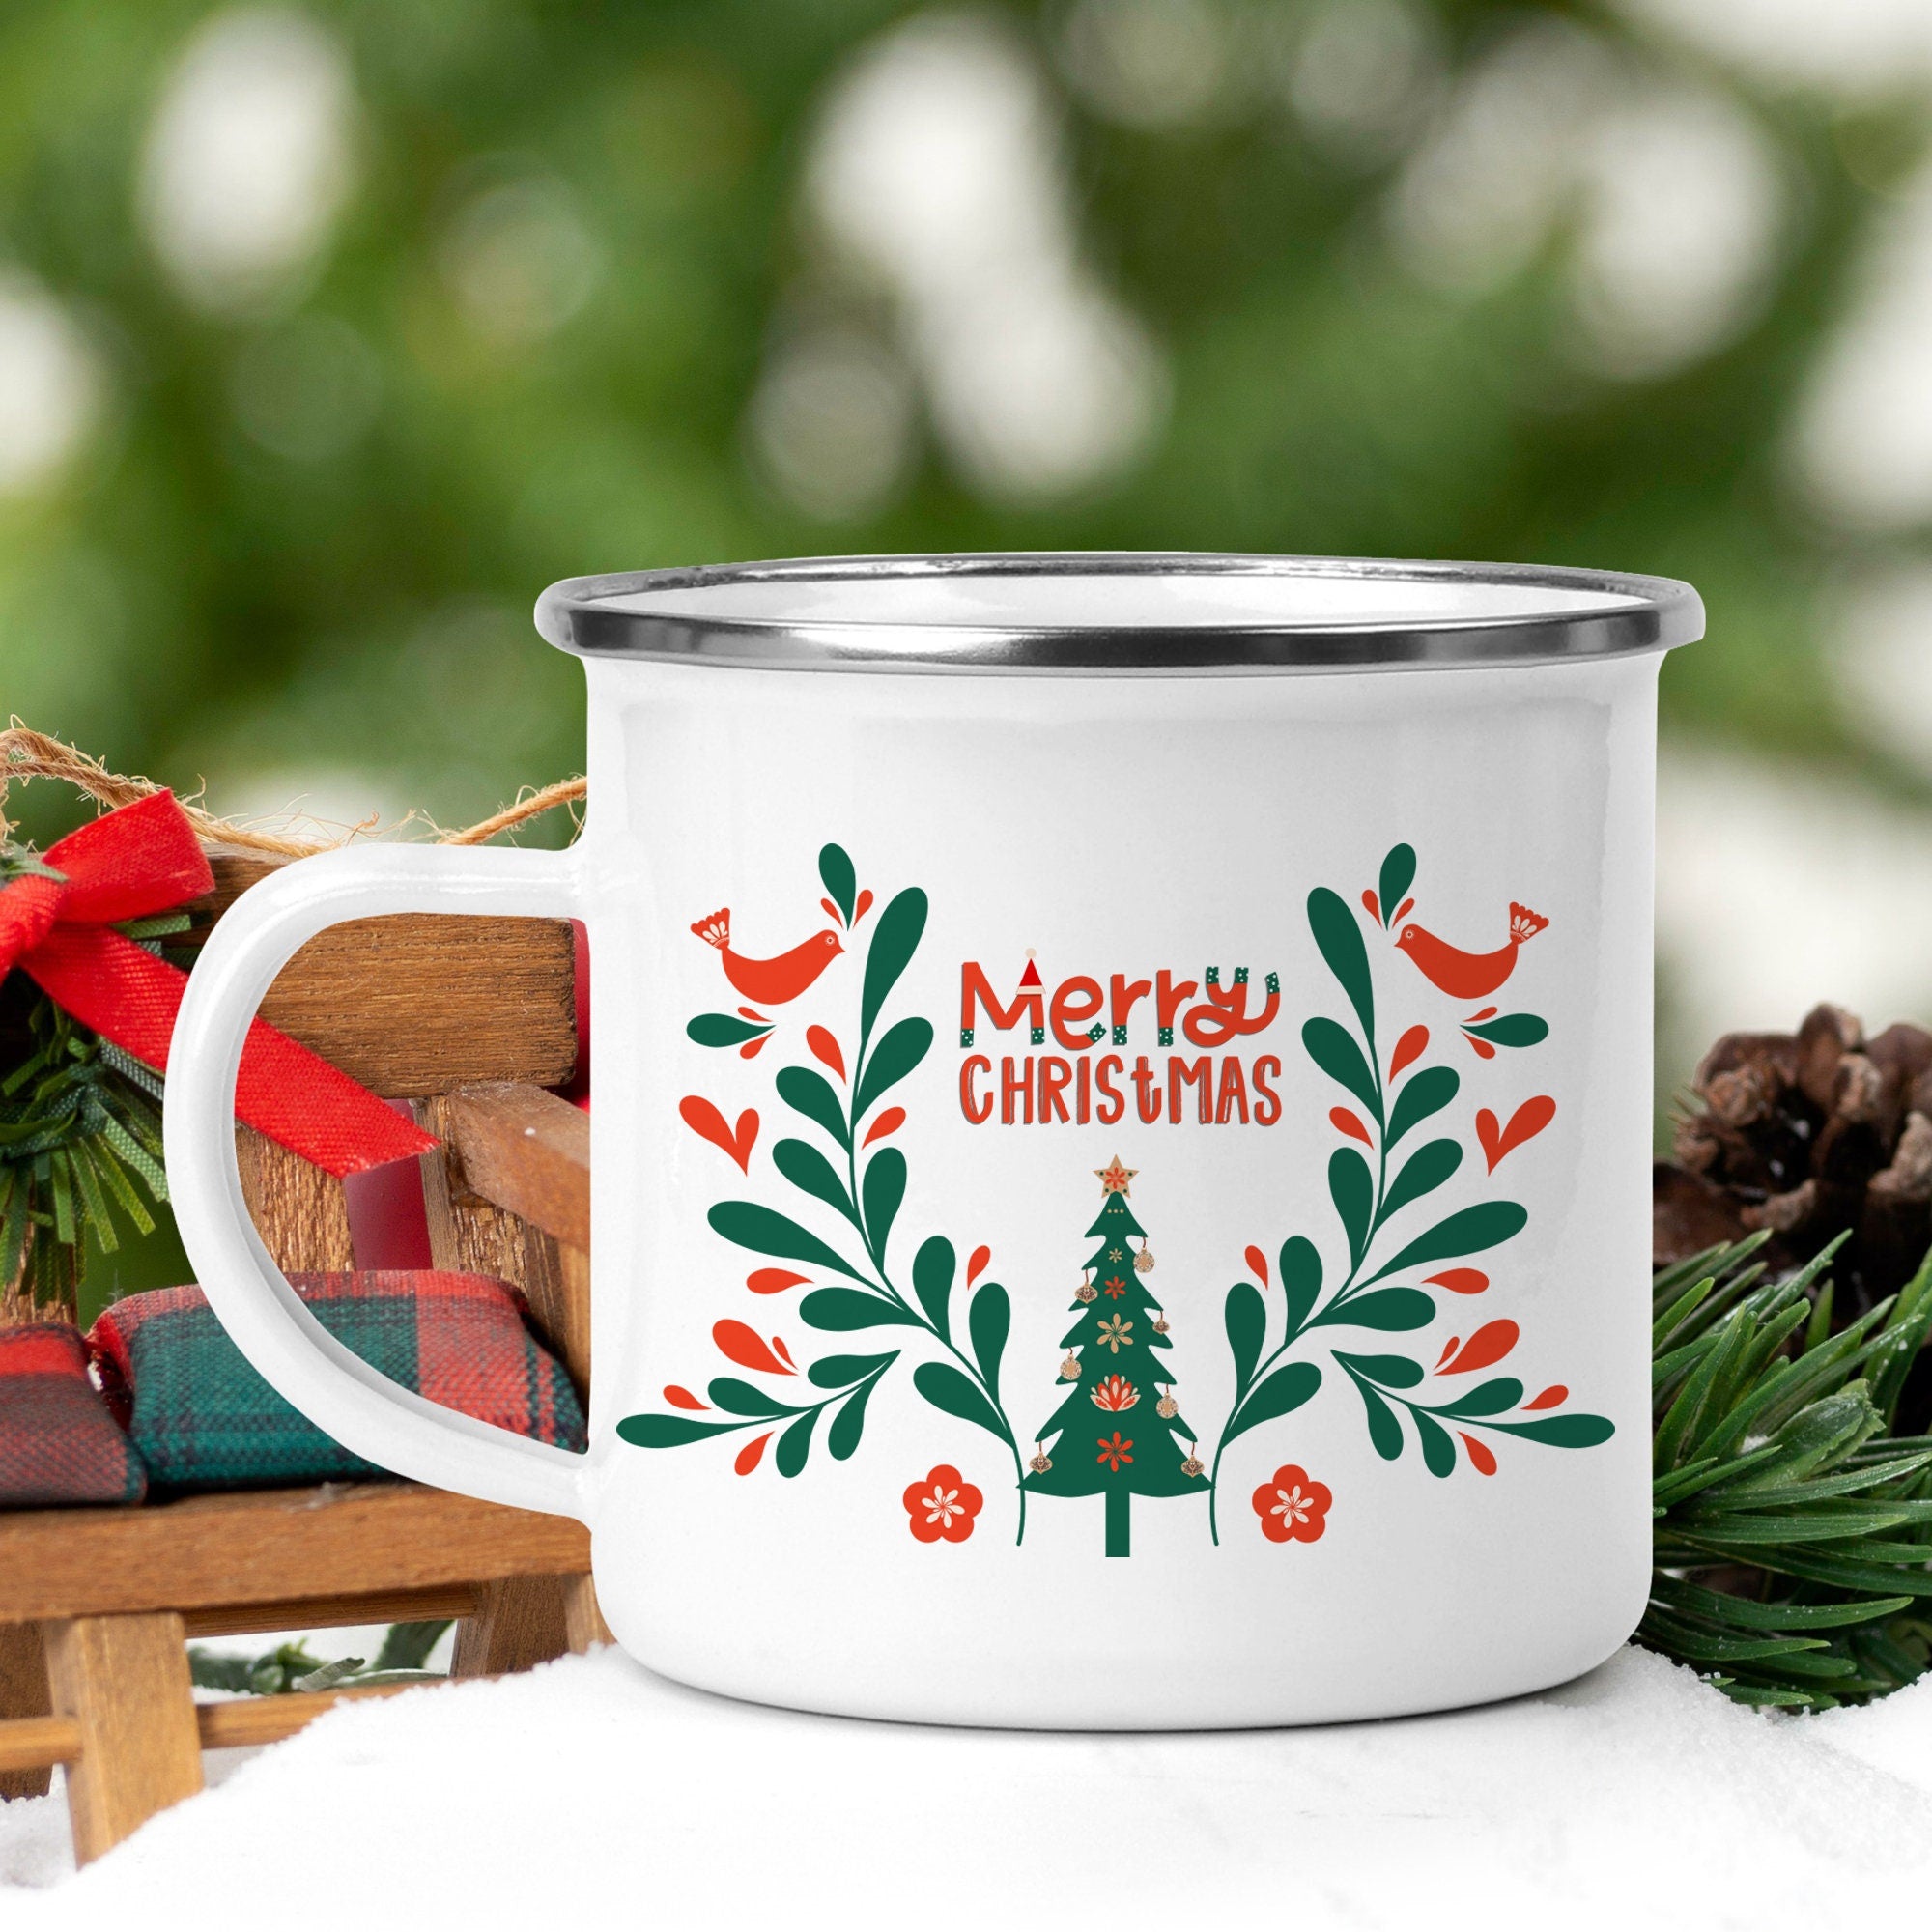 Merry Christmas Enamel Mug, Xmas Gift For Him Her Kids, Unbreakable Cup